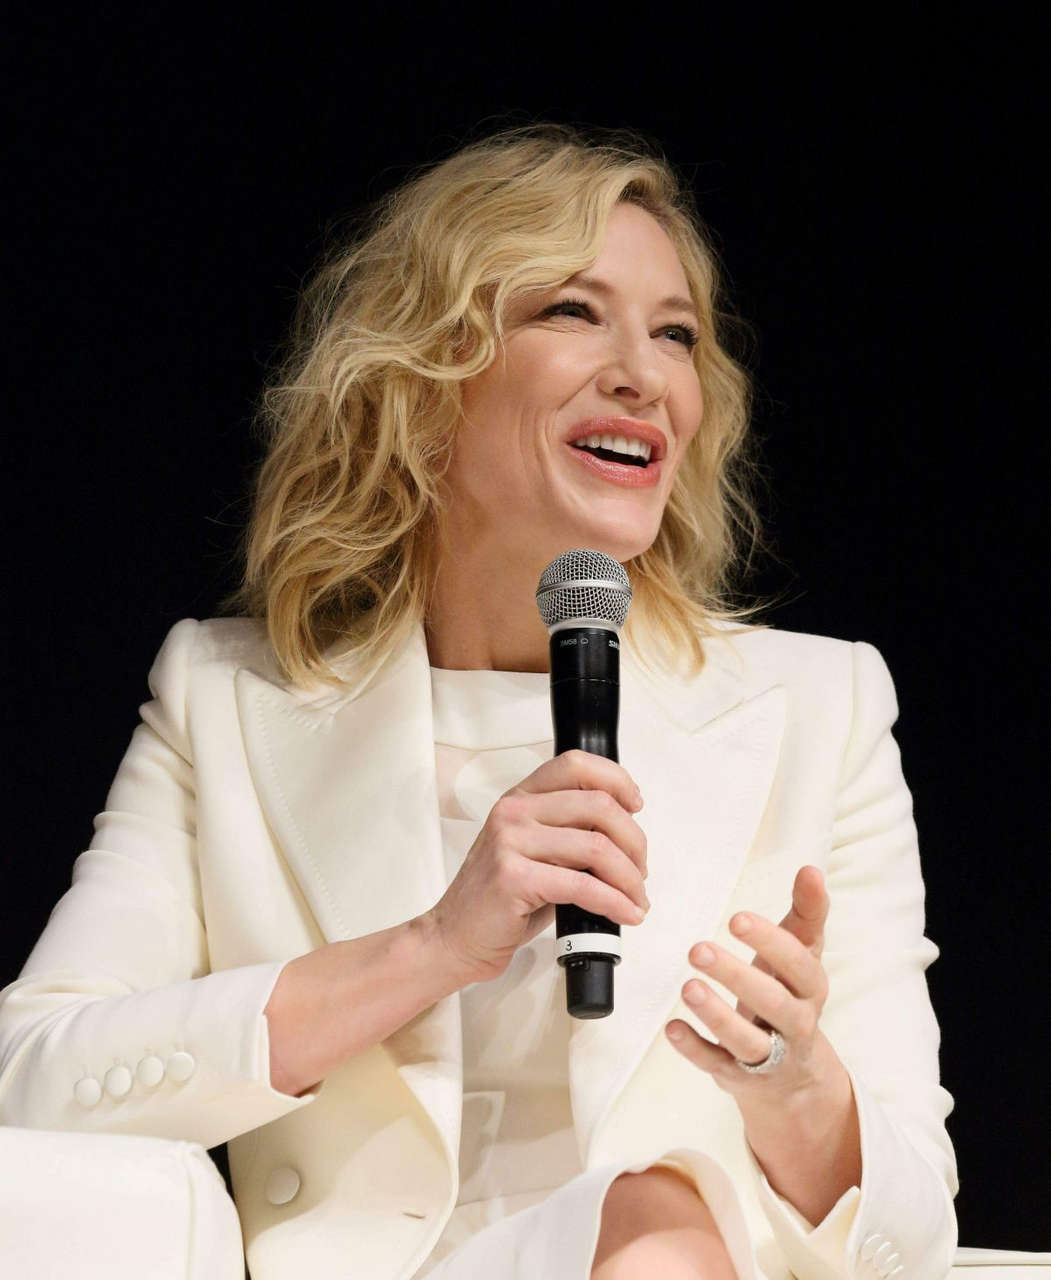 Cate Blanchett Sk Ii Change Destiny Campaign Launch Tokyo